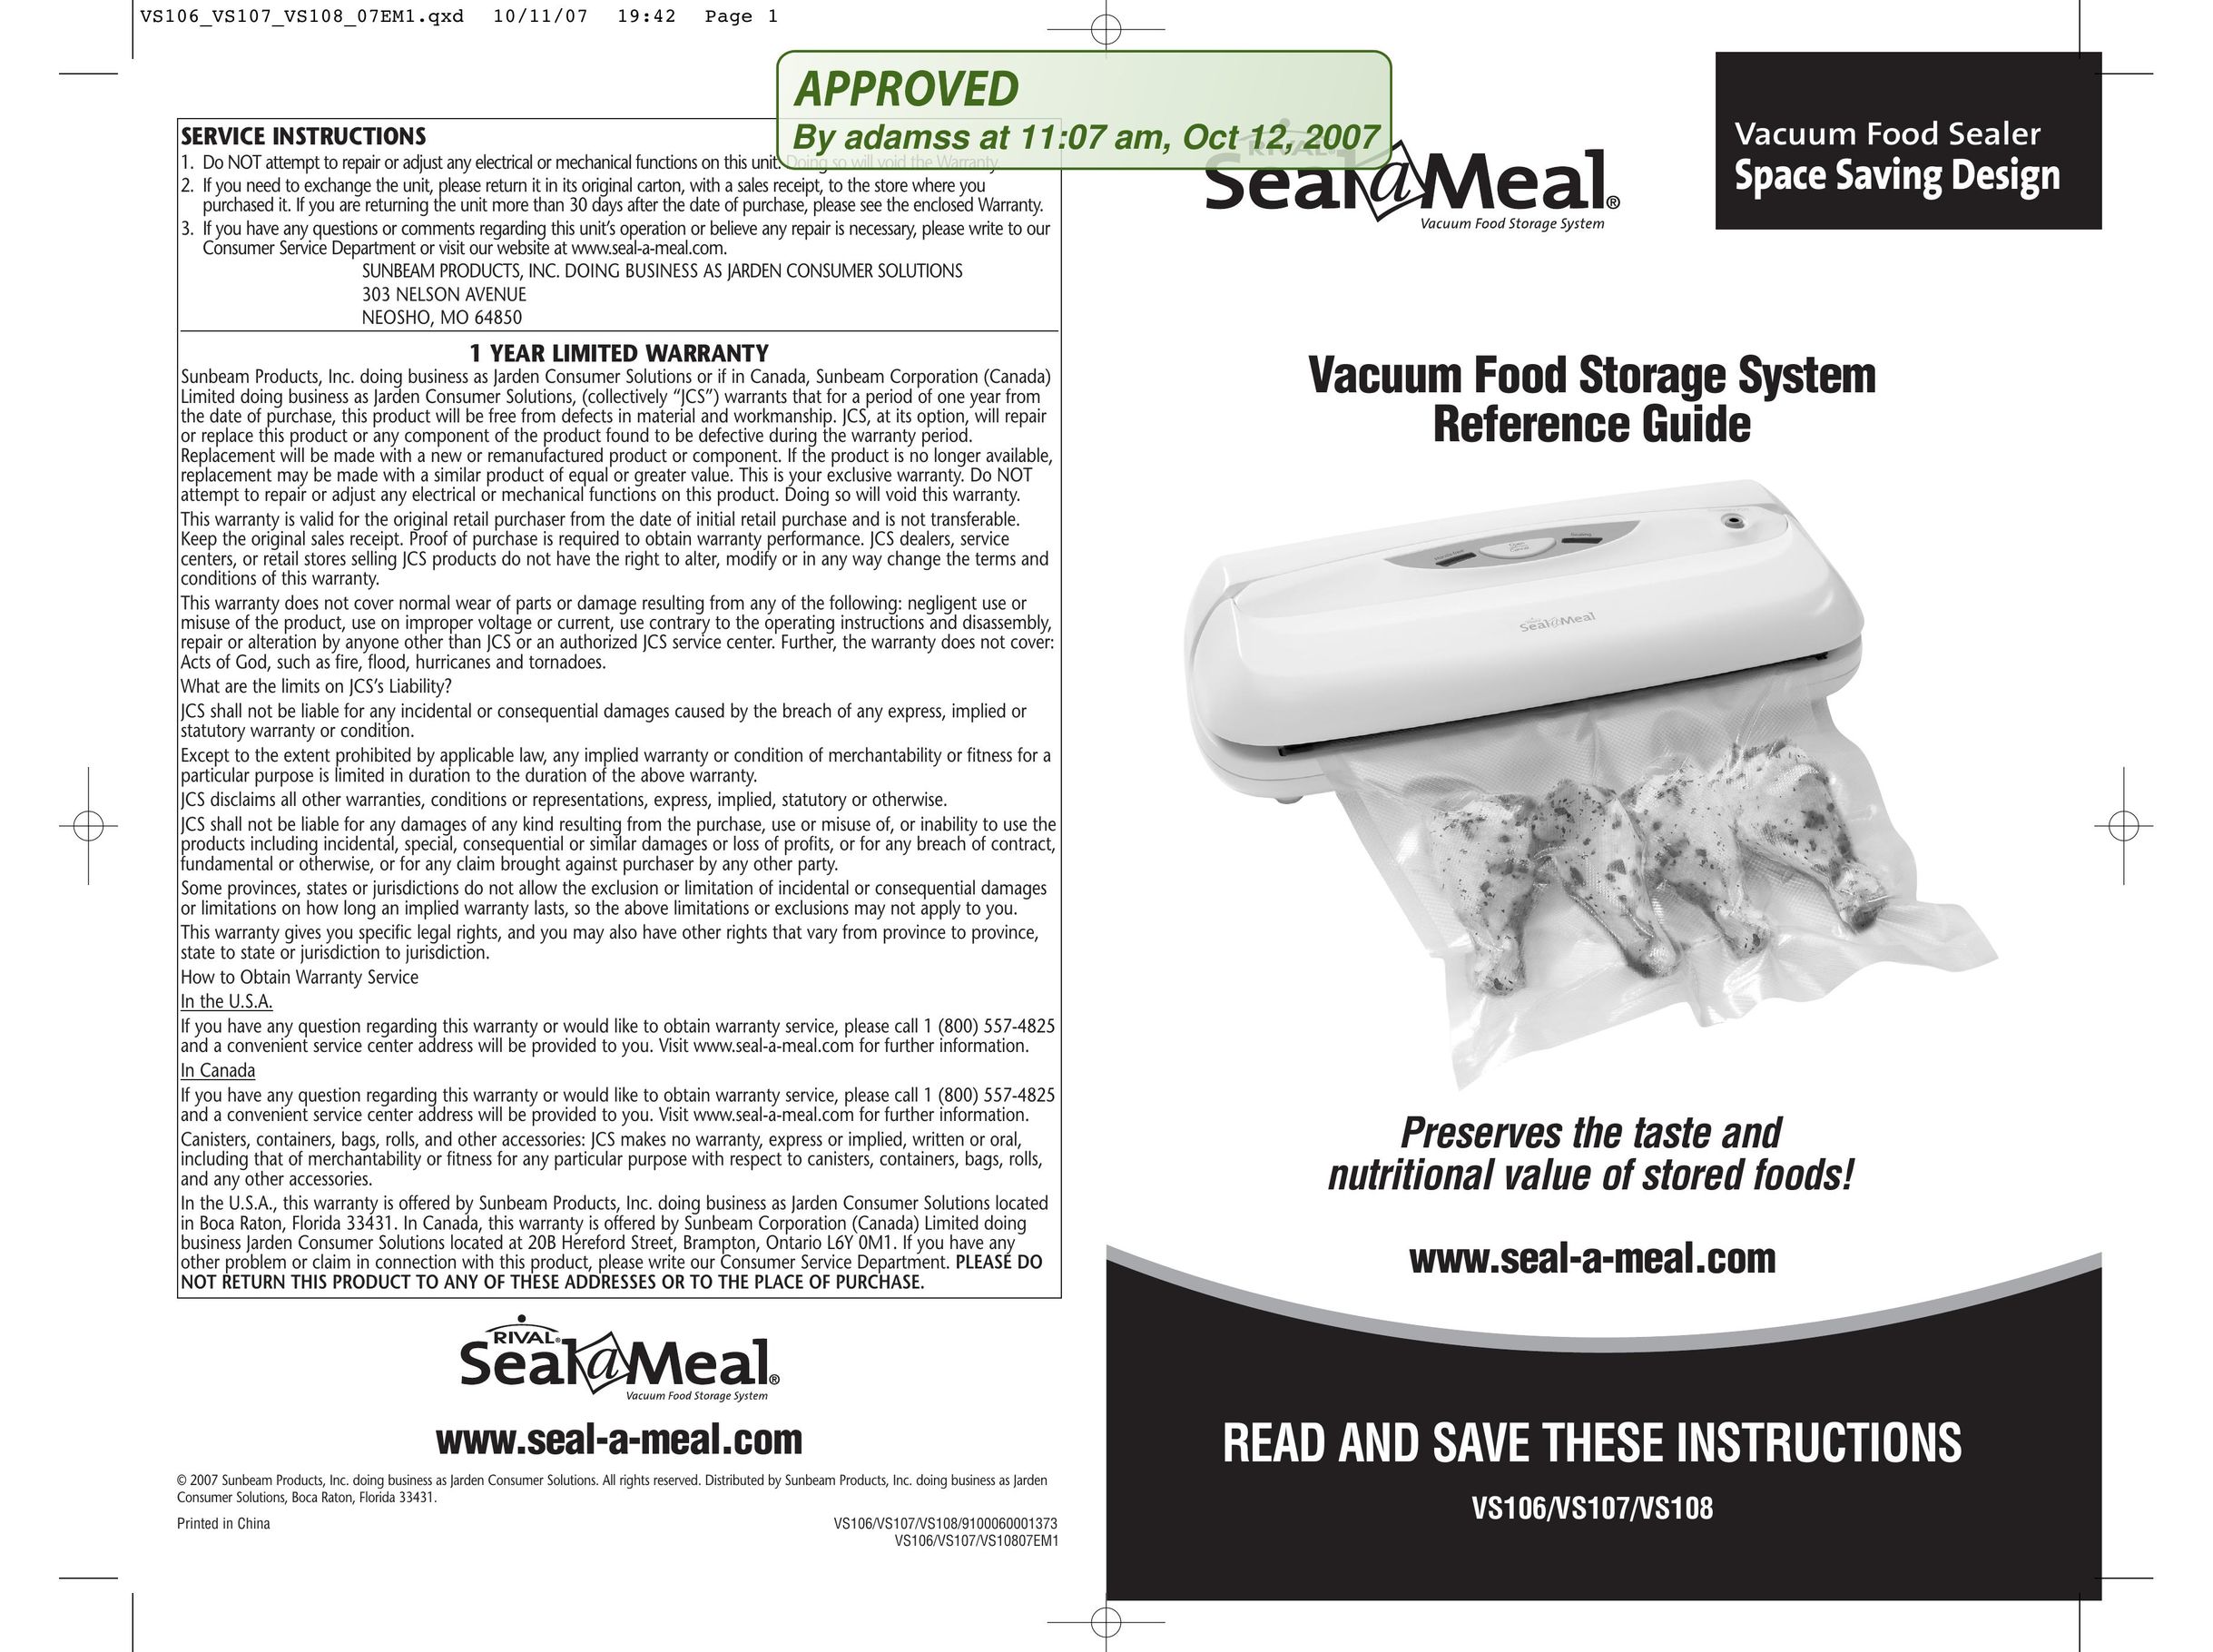 Seal-a-Meal VS108 Food Saver User Manual